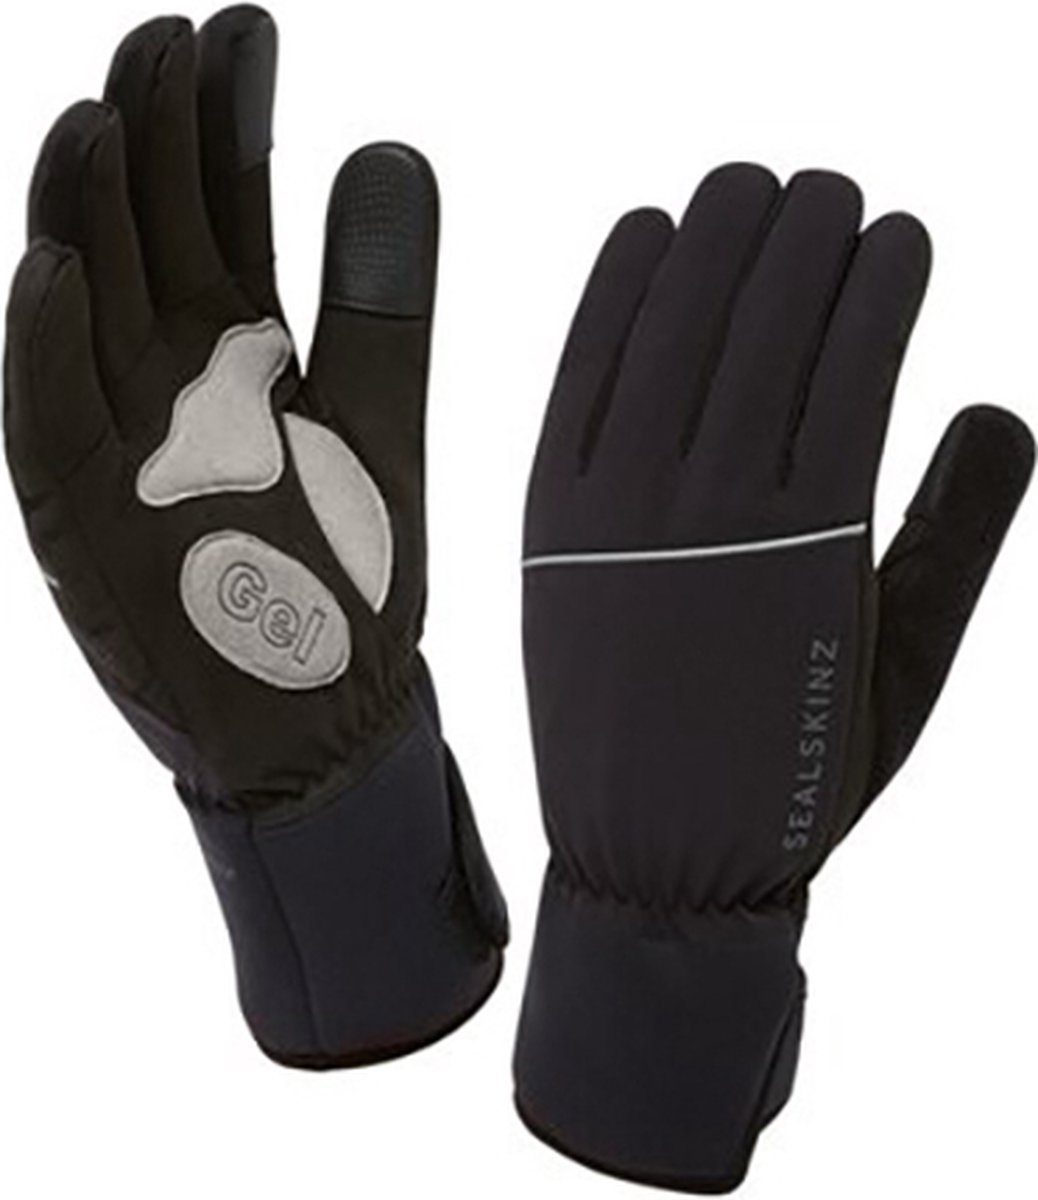 SEALSKINZ Winter Cycle Glove Black (1211418_001)